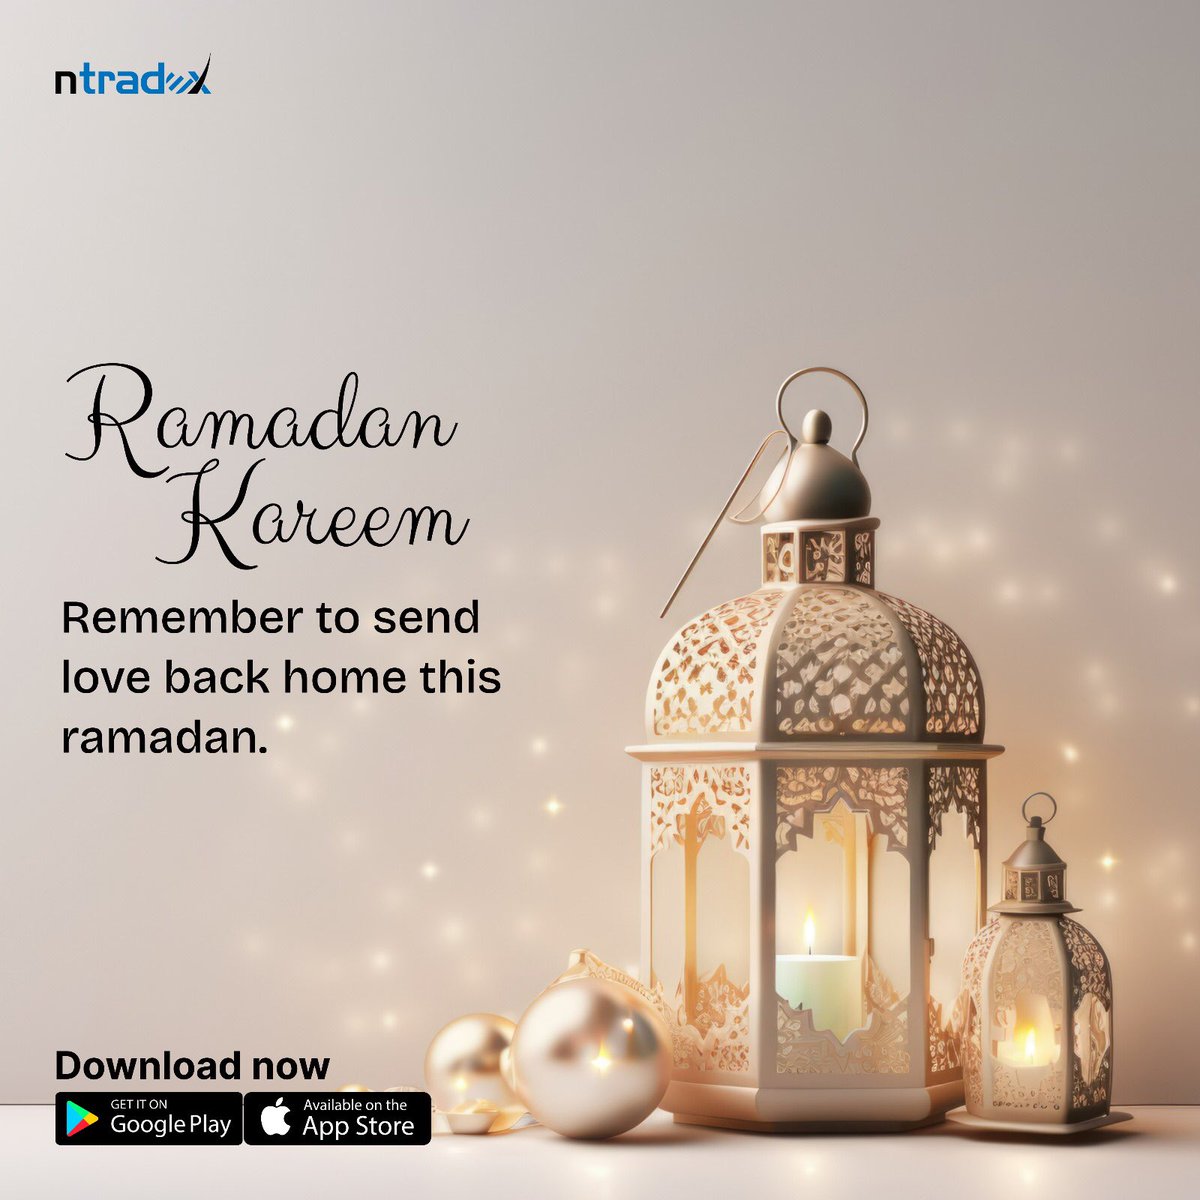 Ntradex is sending wishes of a joyous and prosperous Ramadan to you and your family. ☪️💫

#ntradex #eidmubarak #ramadankareem #currencyexchange #fx #cad #usd #gbp #japa